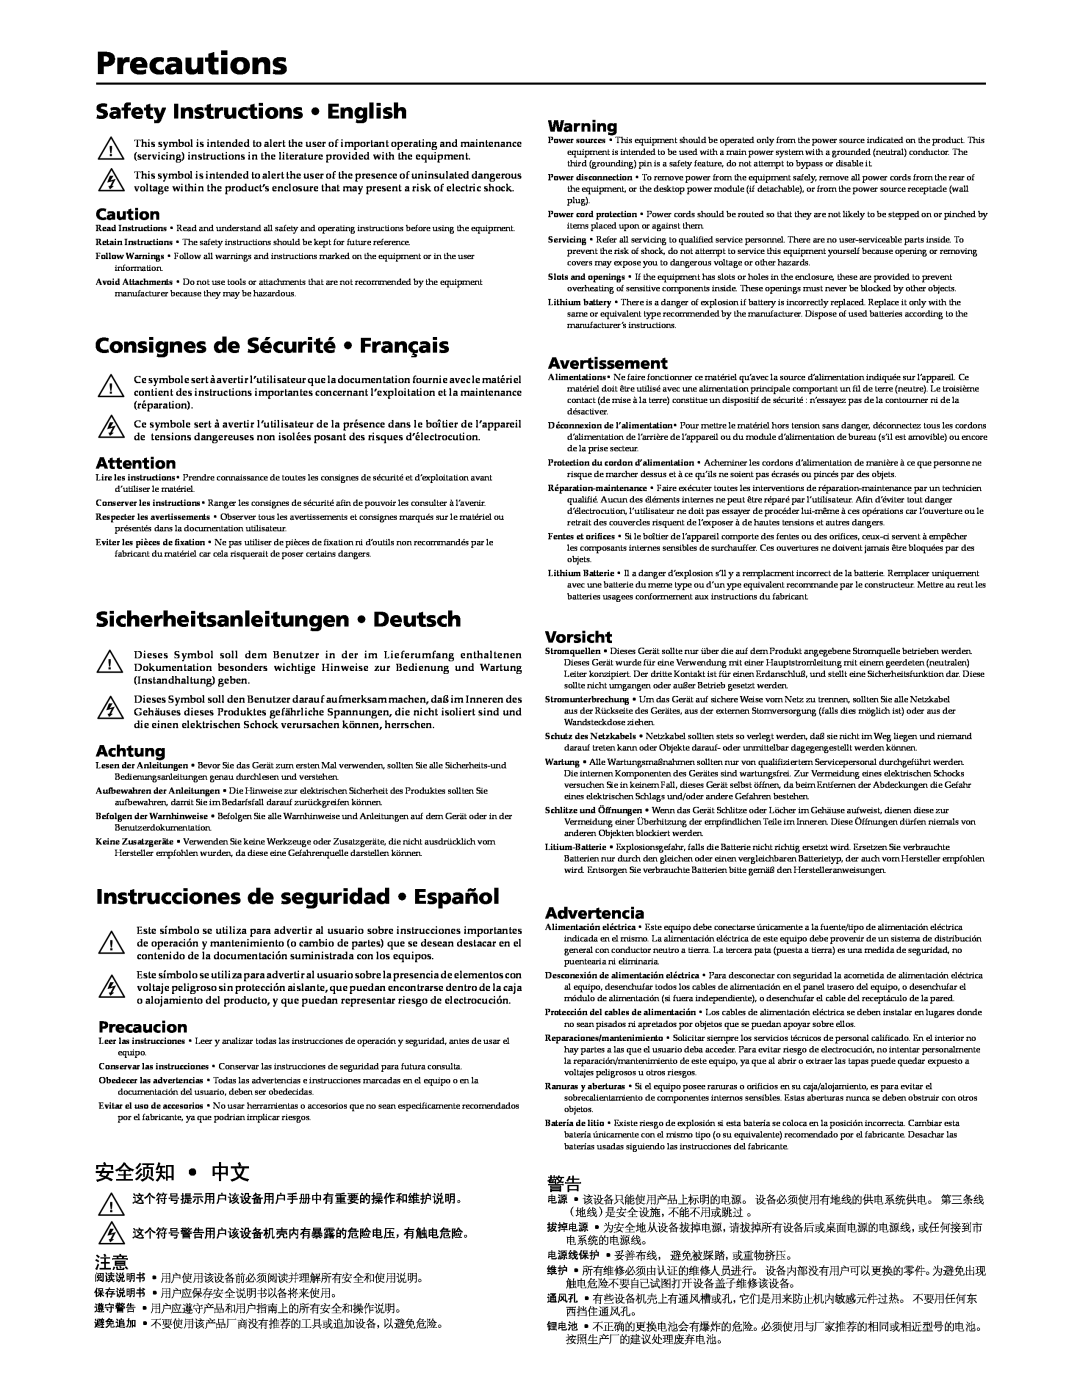 Extron electronic MAV Plus Series manual Precautions, Safety Instructions English, Consignes de Sécurité Français, 安全须知 中文 